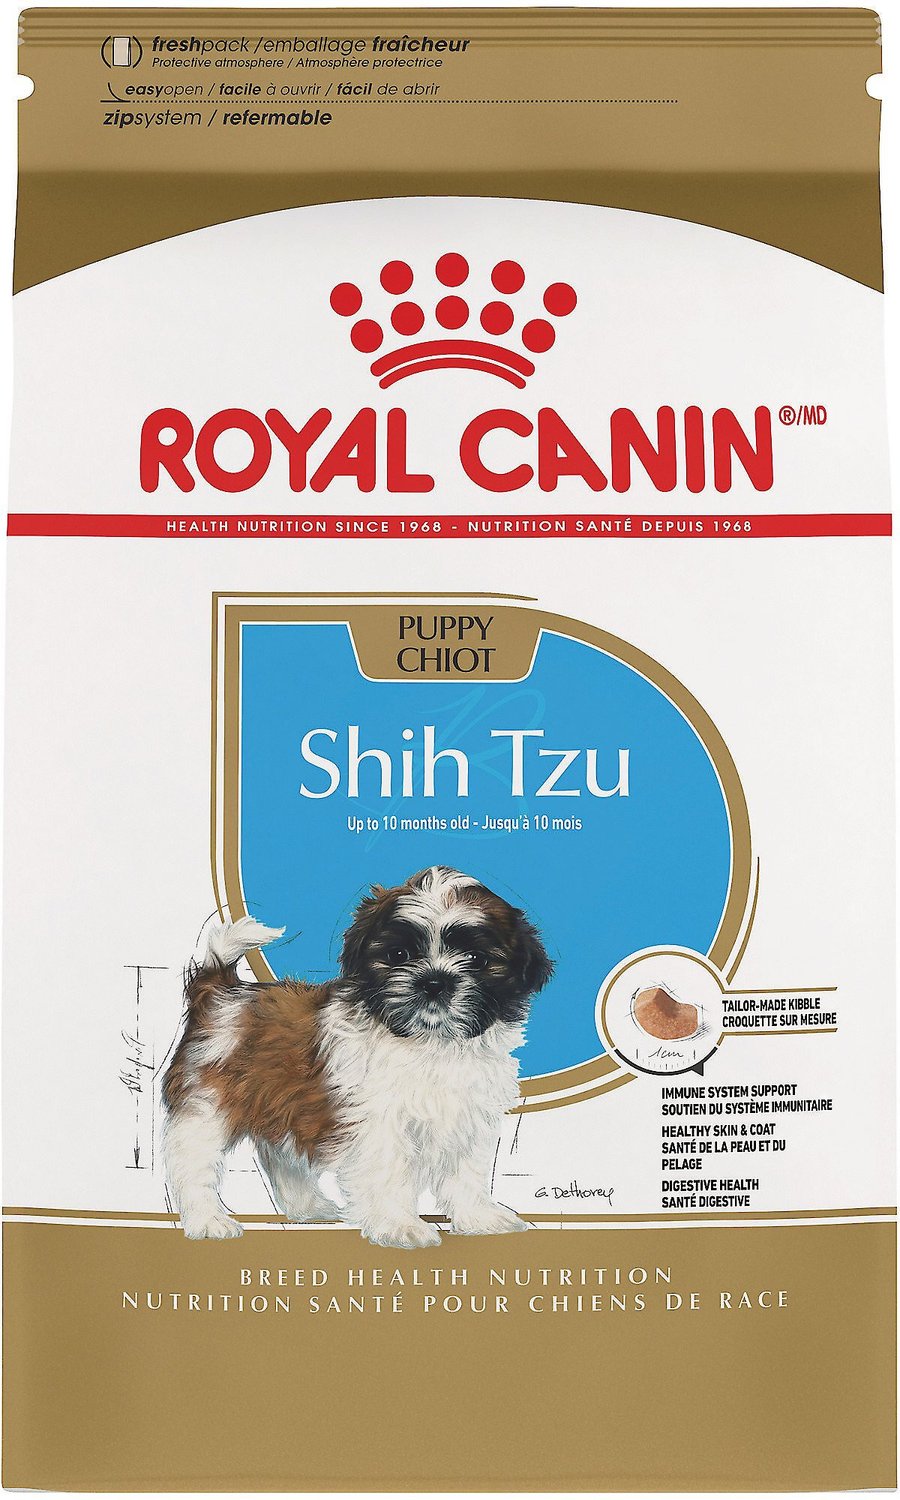 Royal Canin Shih Tzu Puppy Review